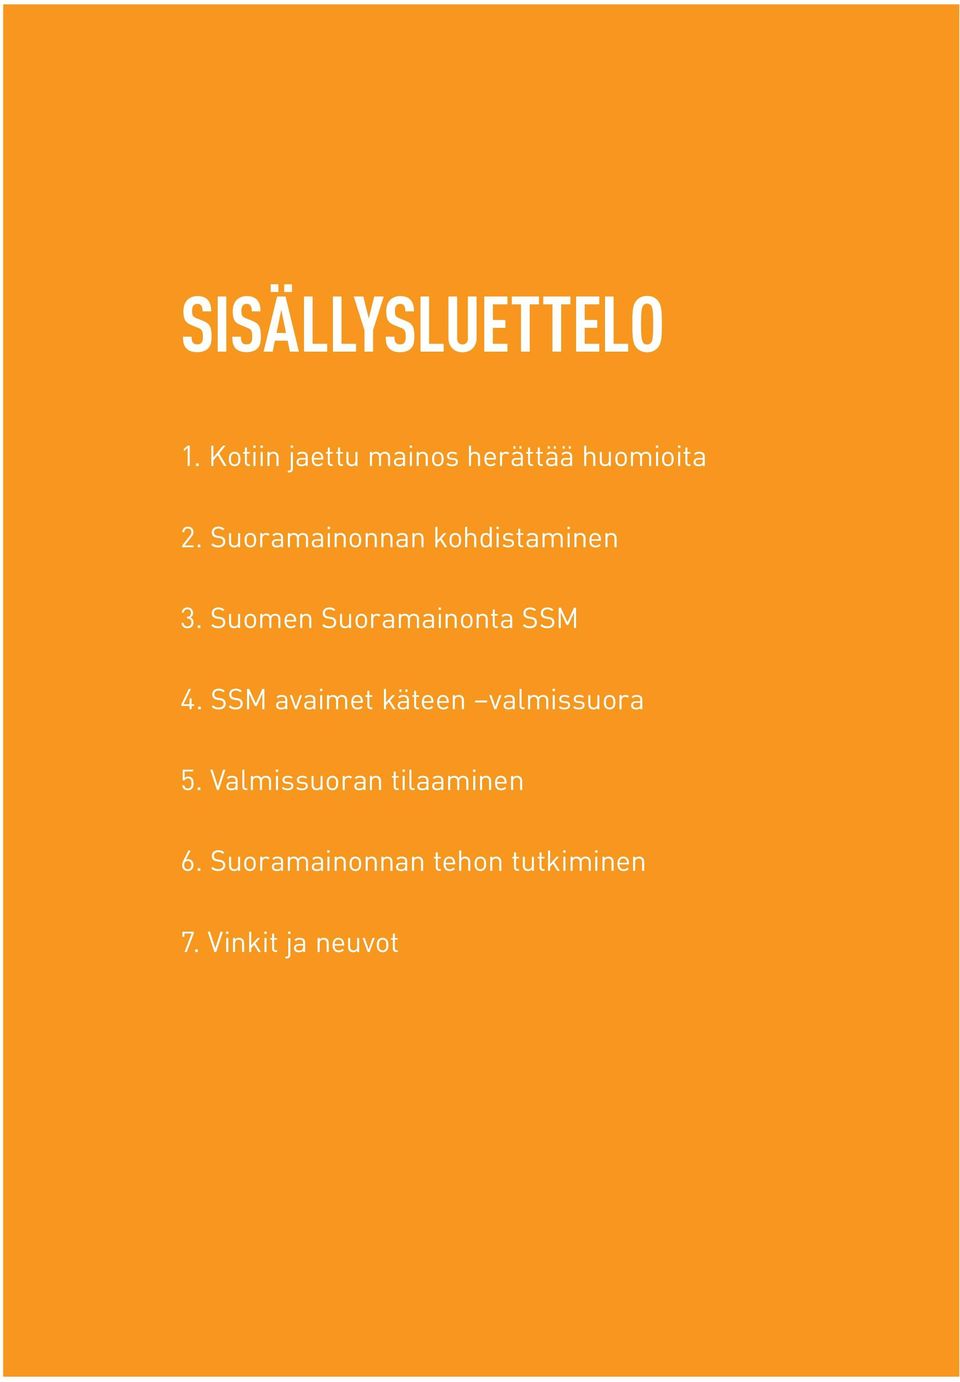 Suoramainonnan kohdistaminen 3. Suomen Suoramainonta SSM 4.